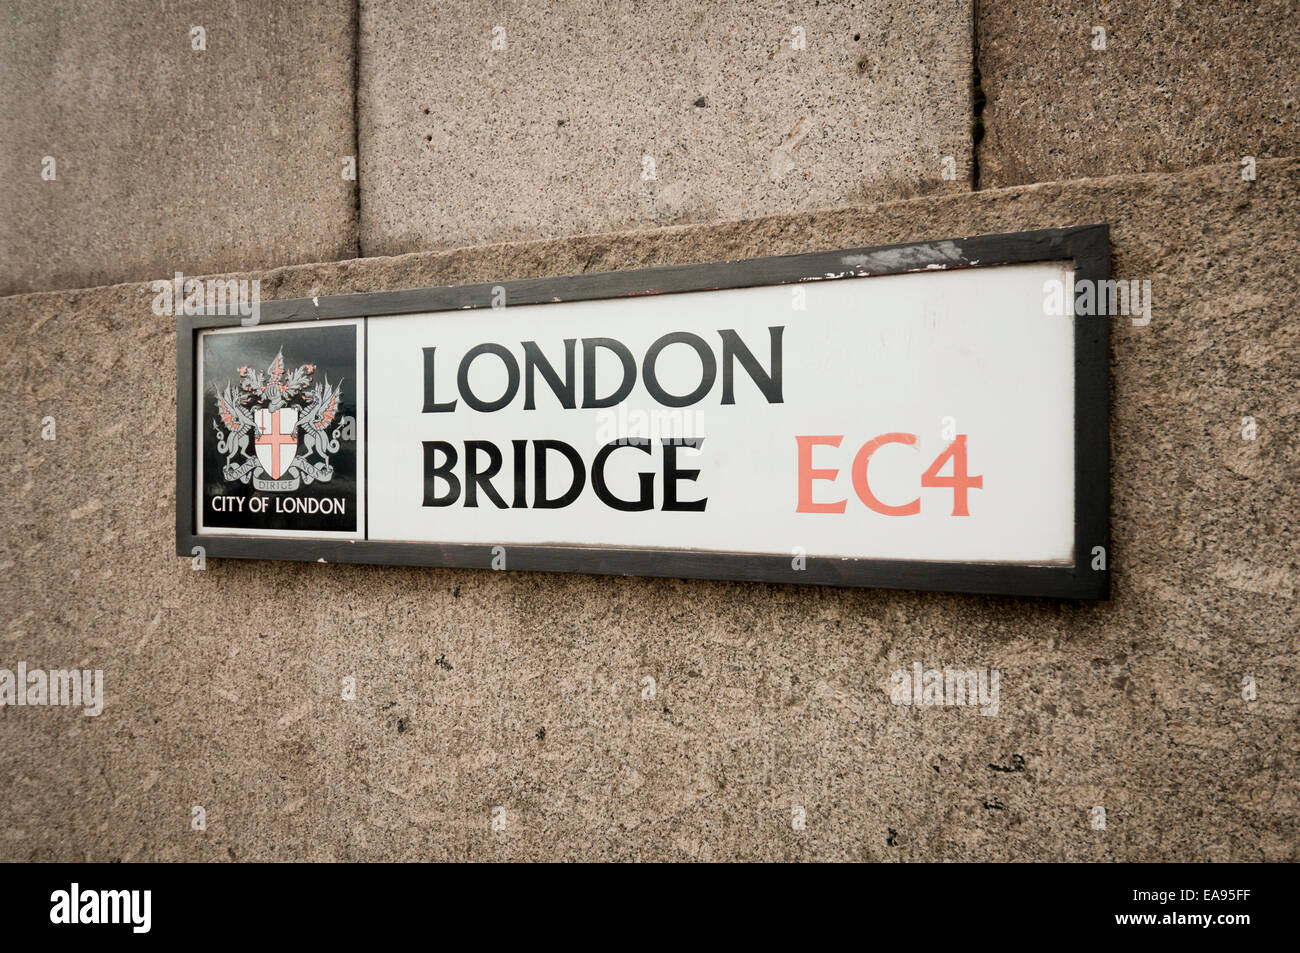 London Bridge street sign EC4 Stock Photo